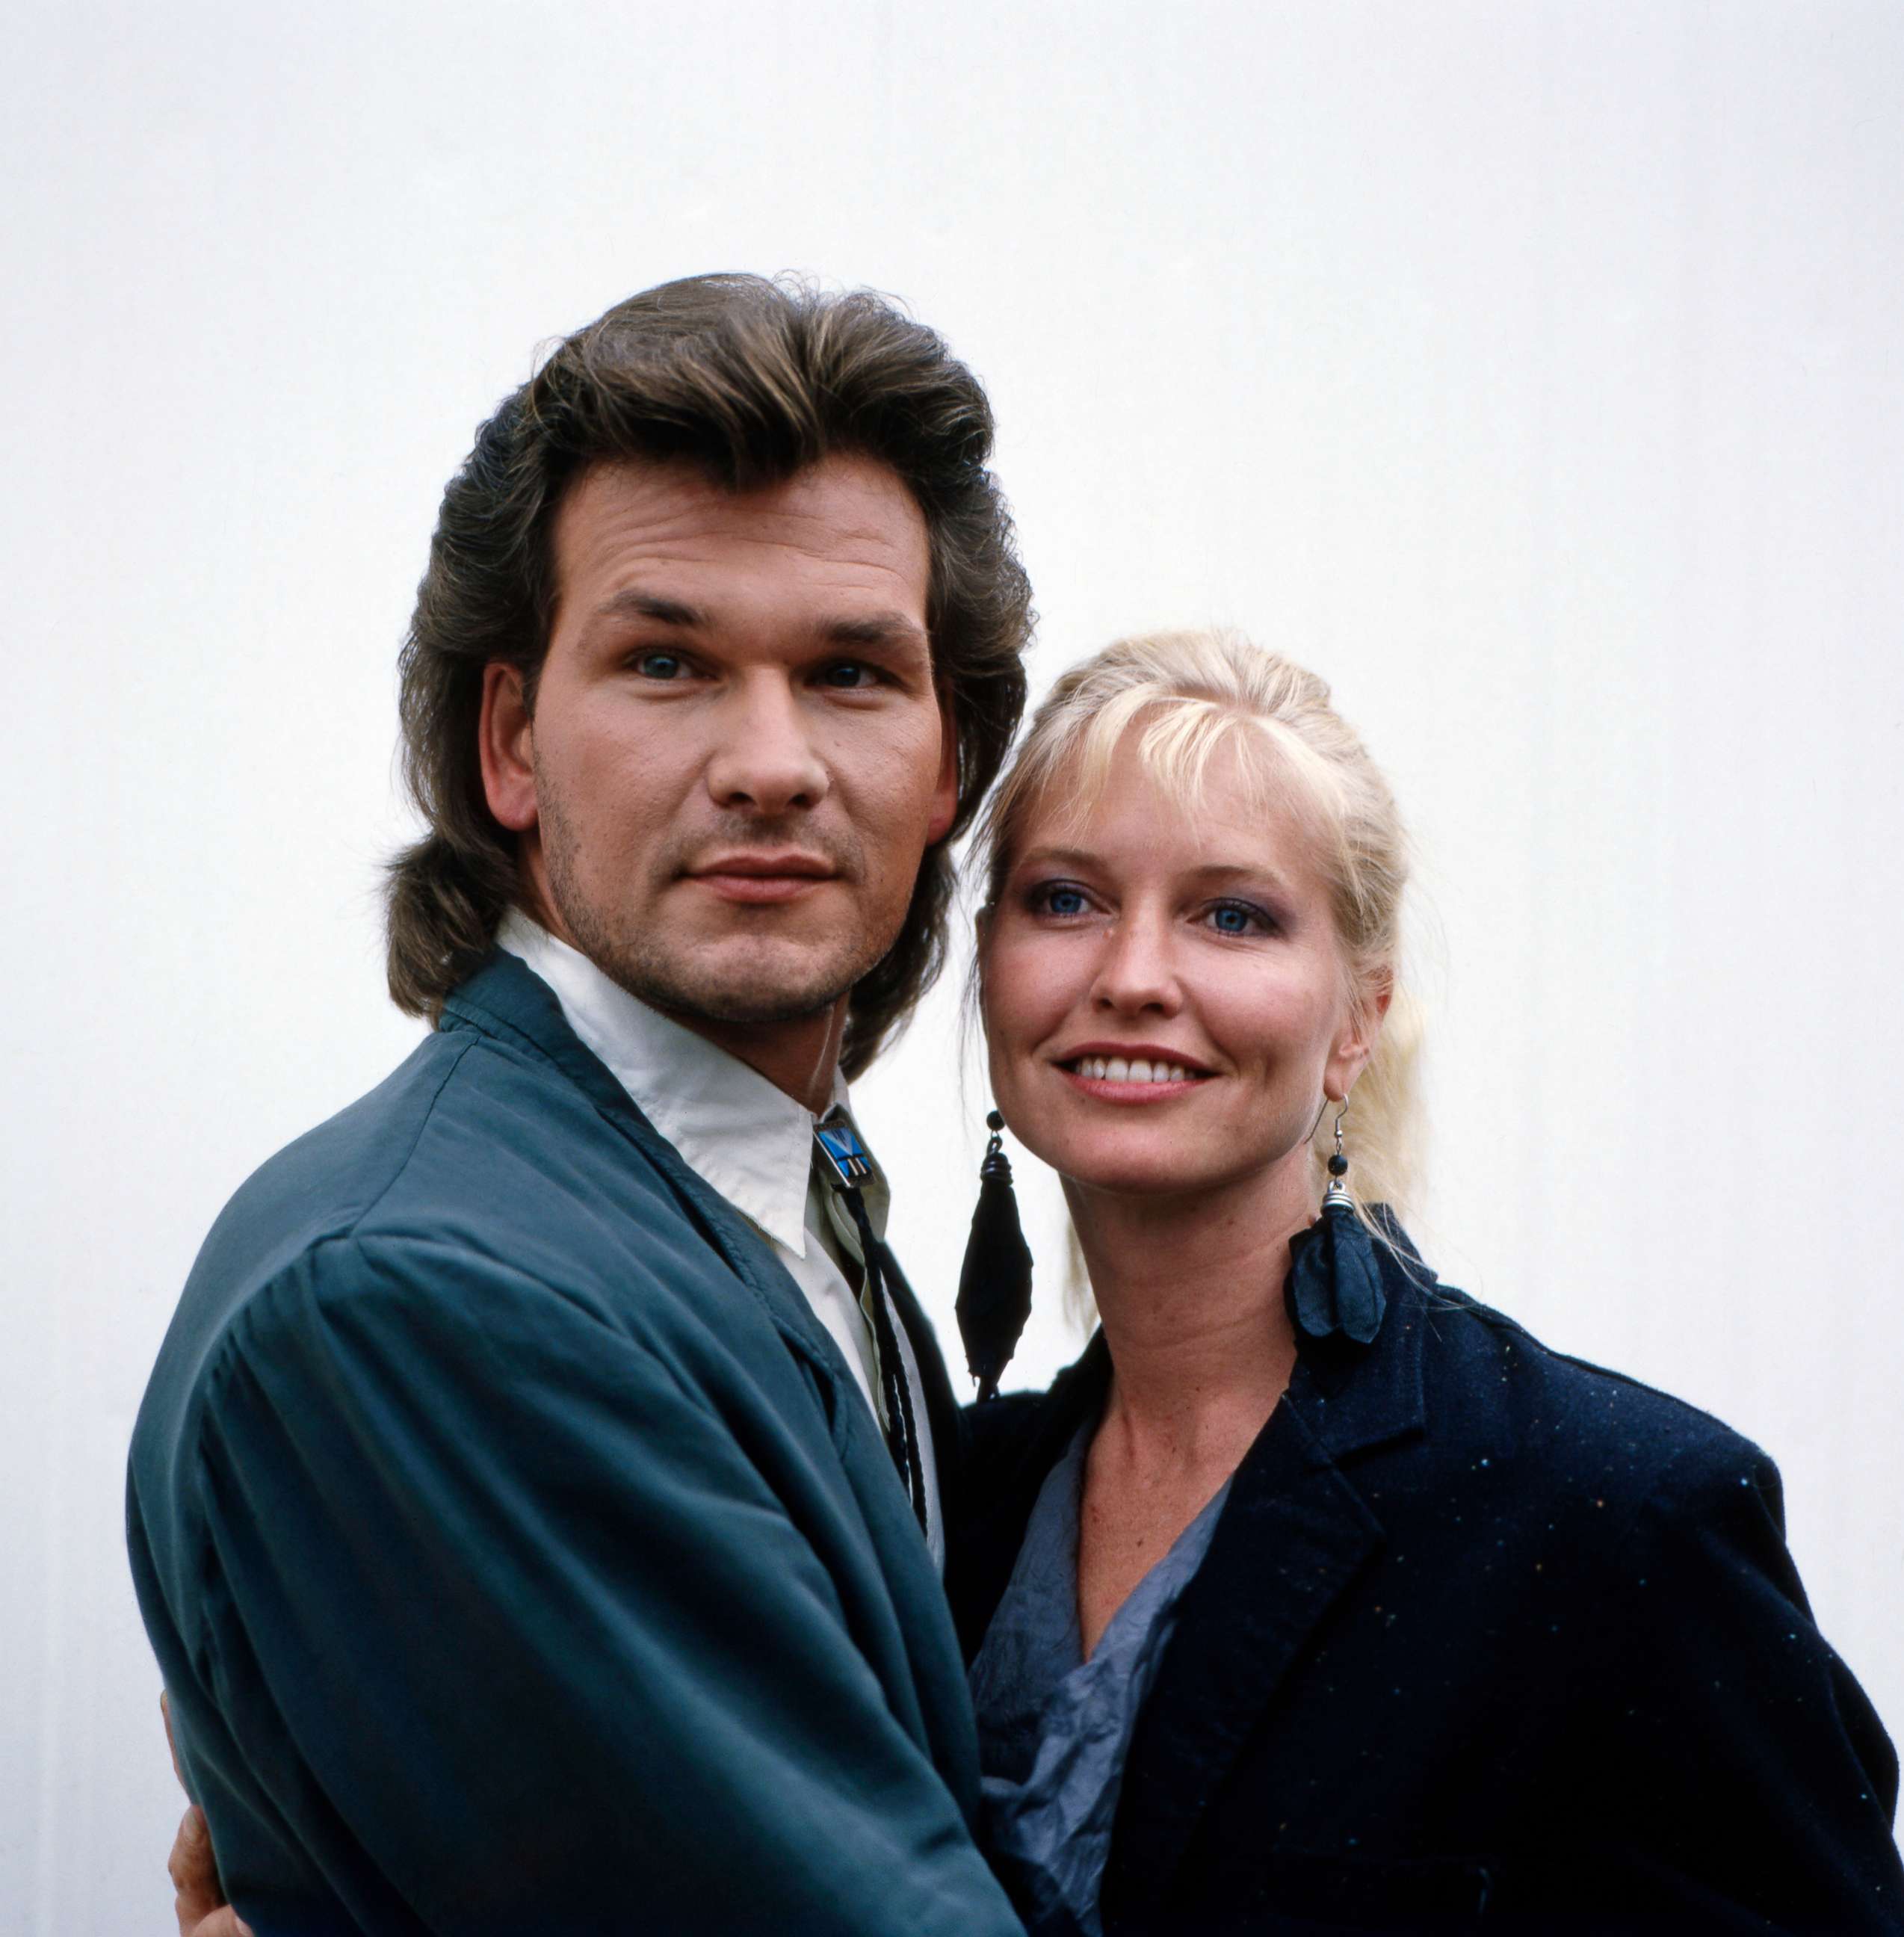 PHOTO: Patrick Swayze poses with his wife Lisa Niemi, circa 1980s.